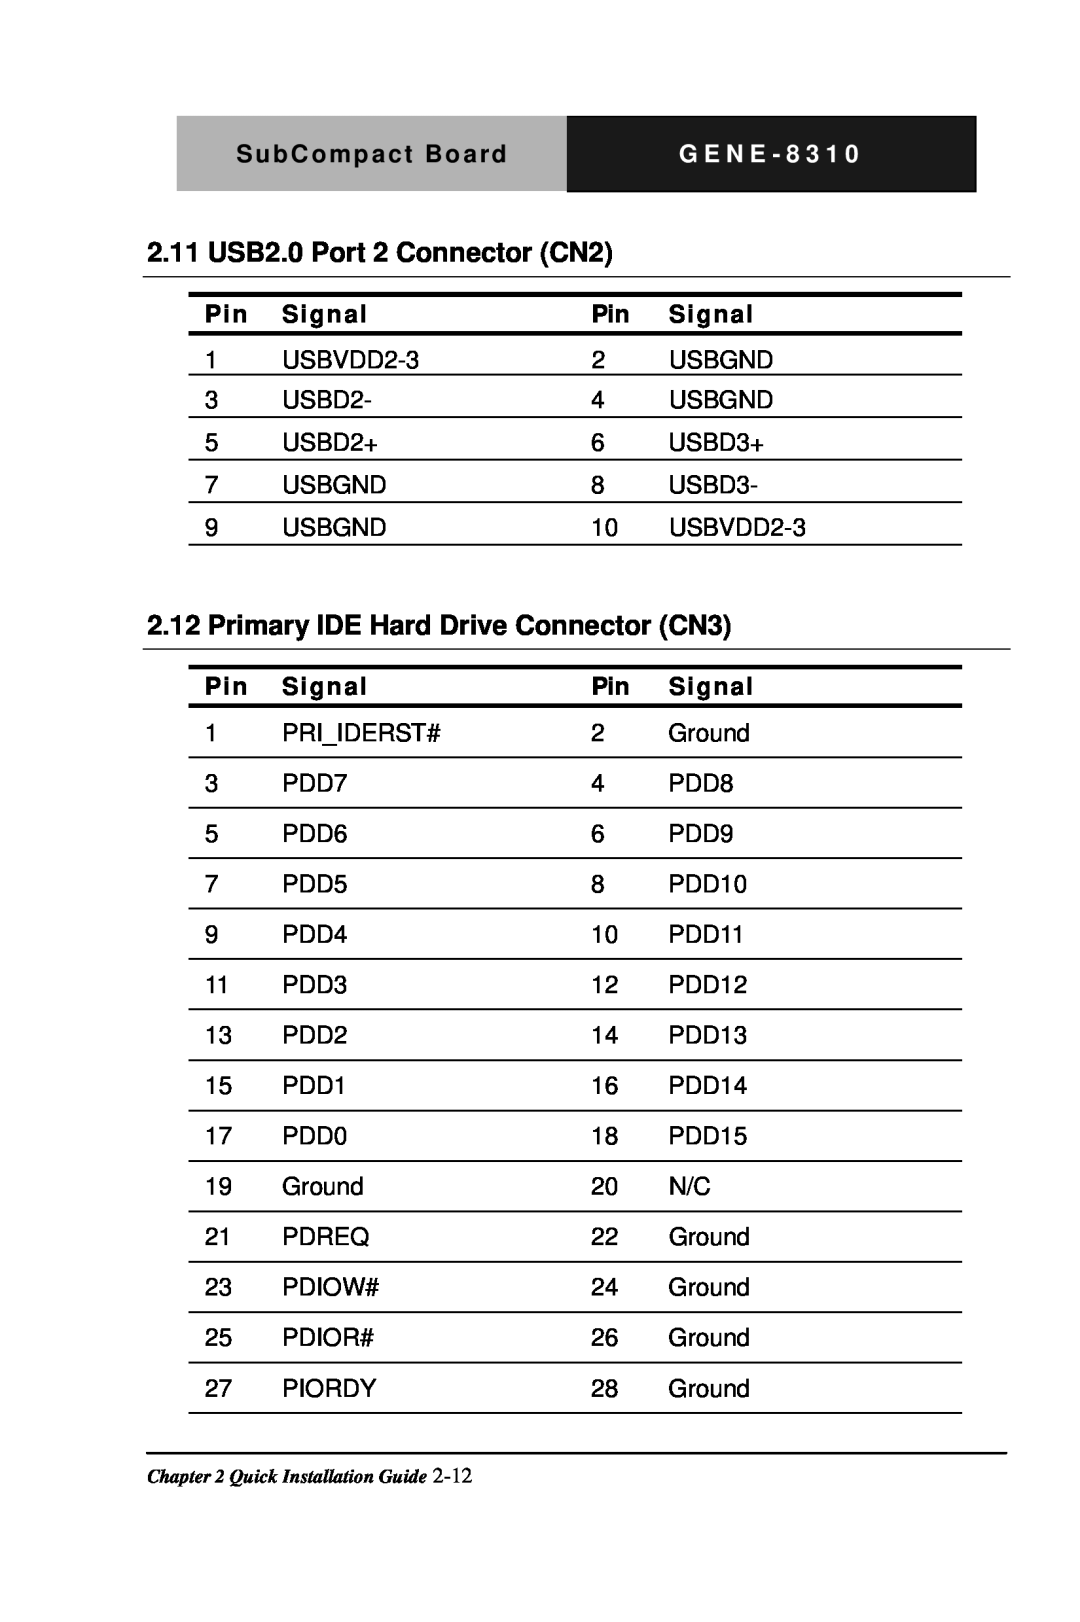 Intel GENE-8310 2.11 USB2.0 Port 2 Connector CN2, Primary IDE Hard Drive Connector CN3, SubCompact BoardG E N E - 8 3 1 